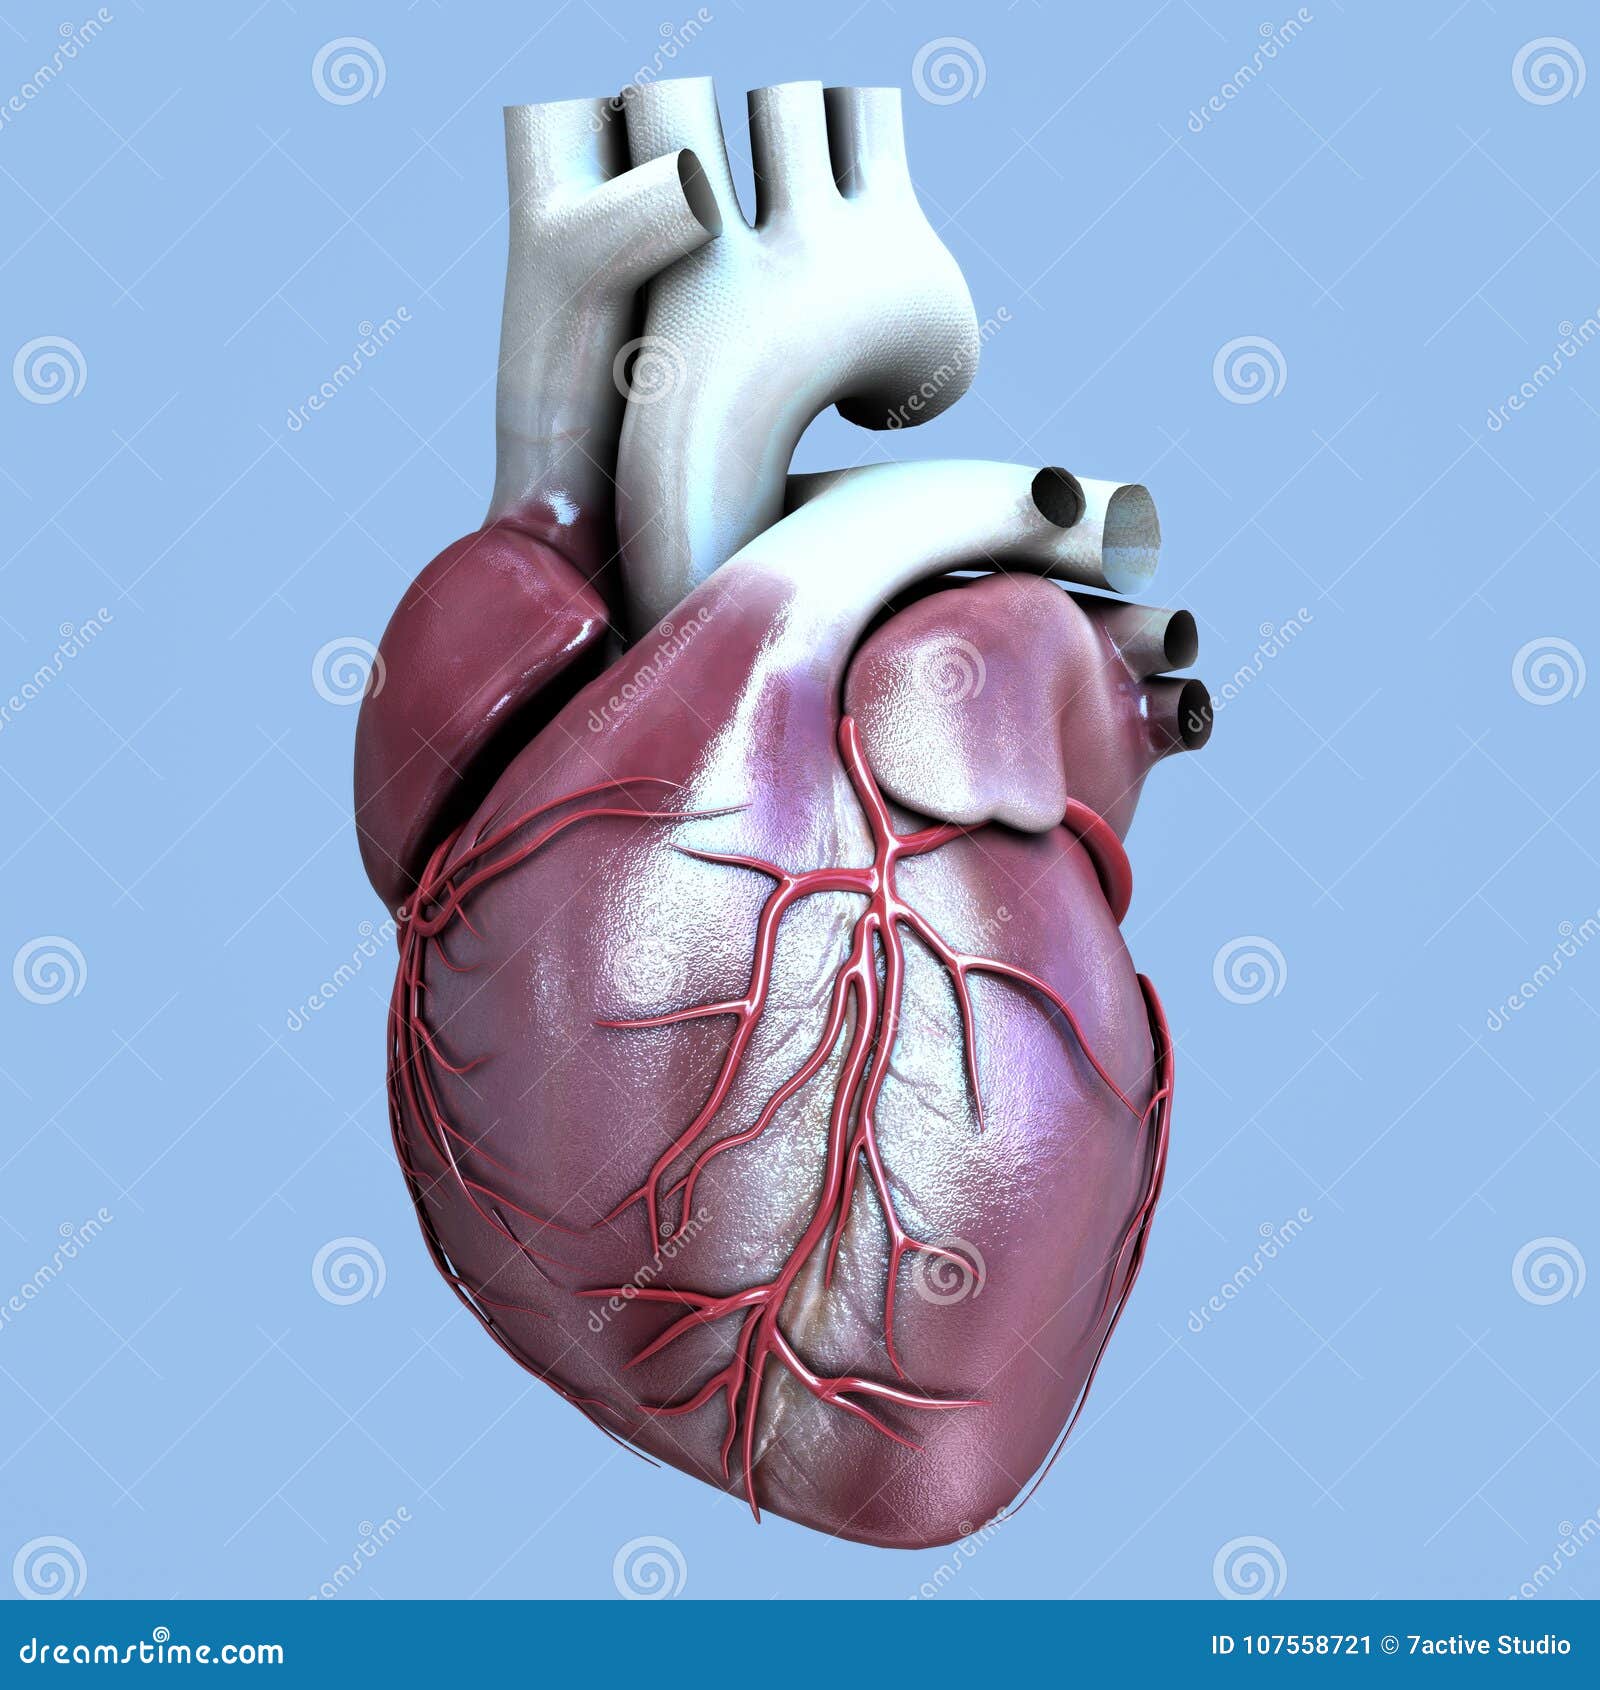 human organ heart